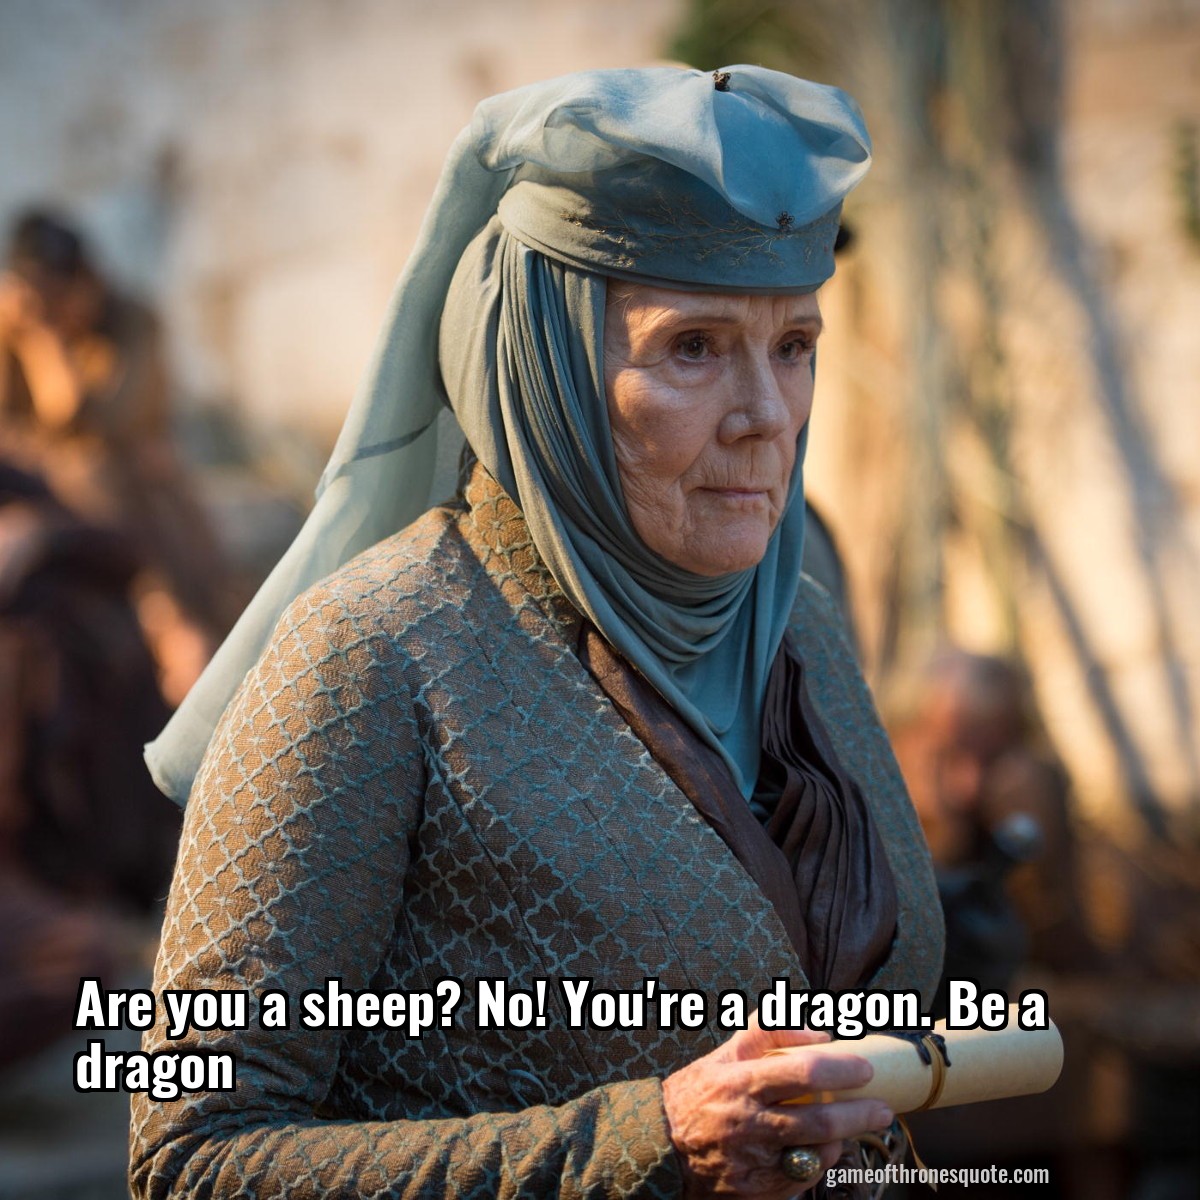 Are you a sheep? No! You're a dragon. Be a dragon